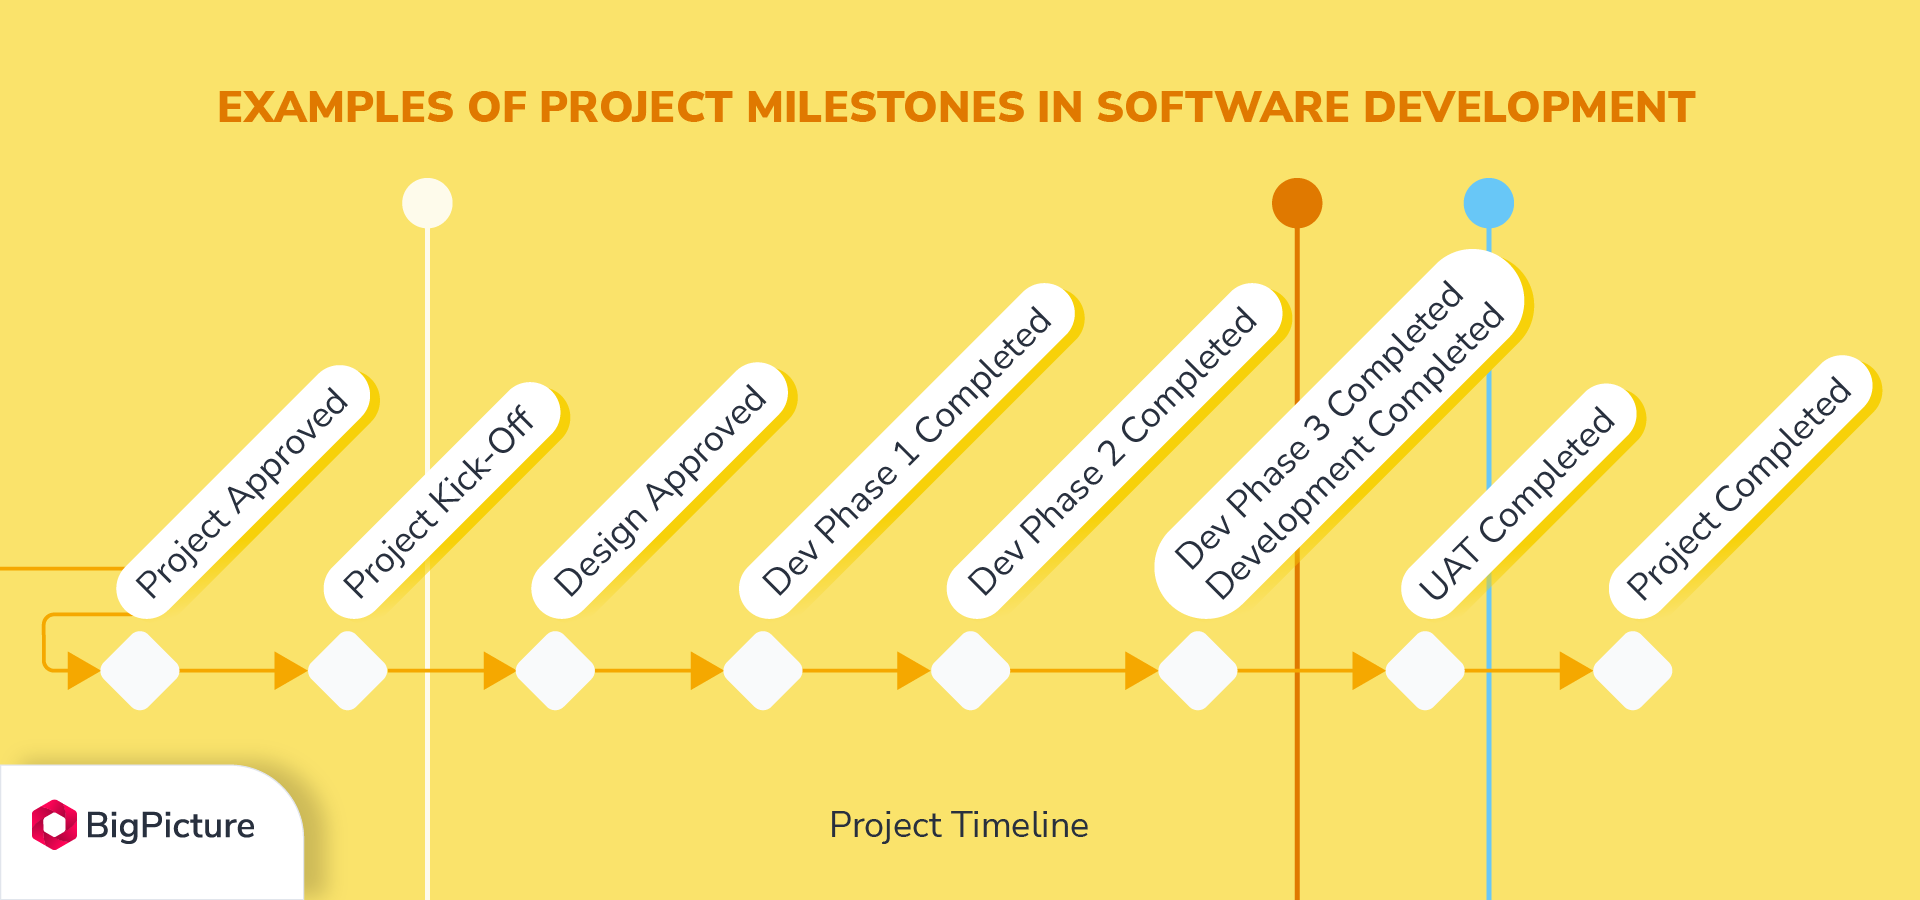 Examples of project milestones in software development.